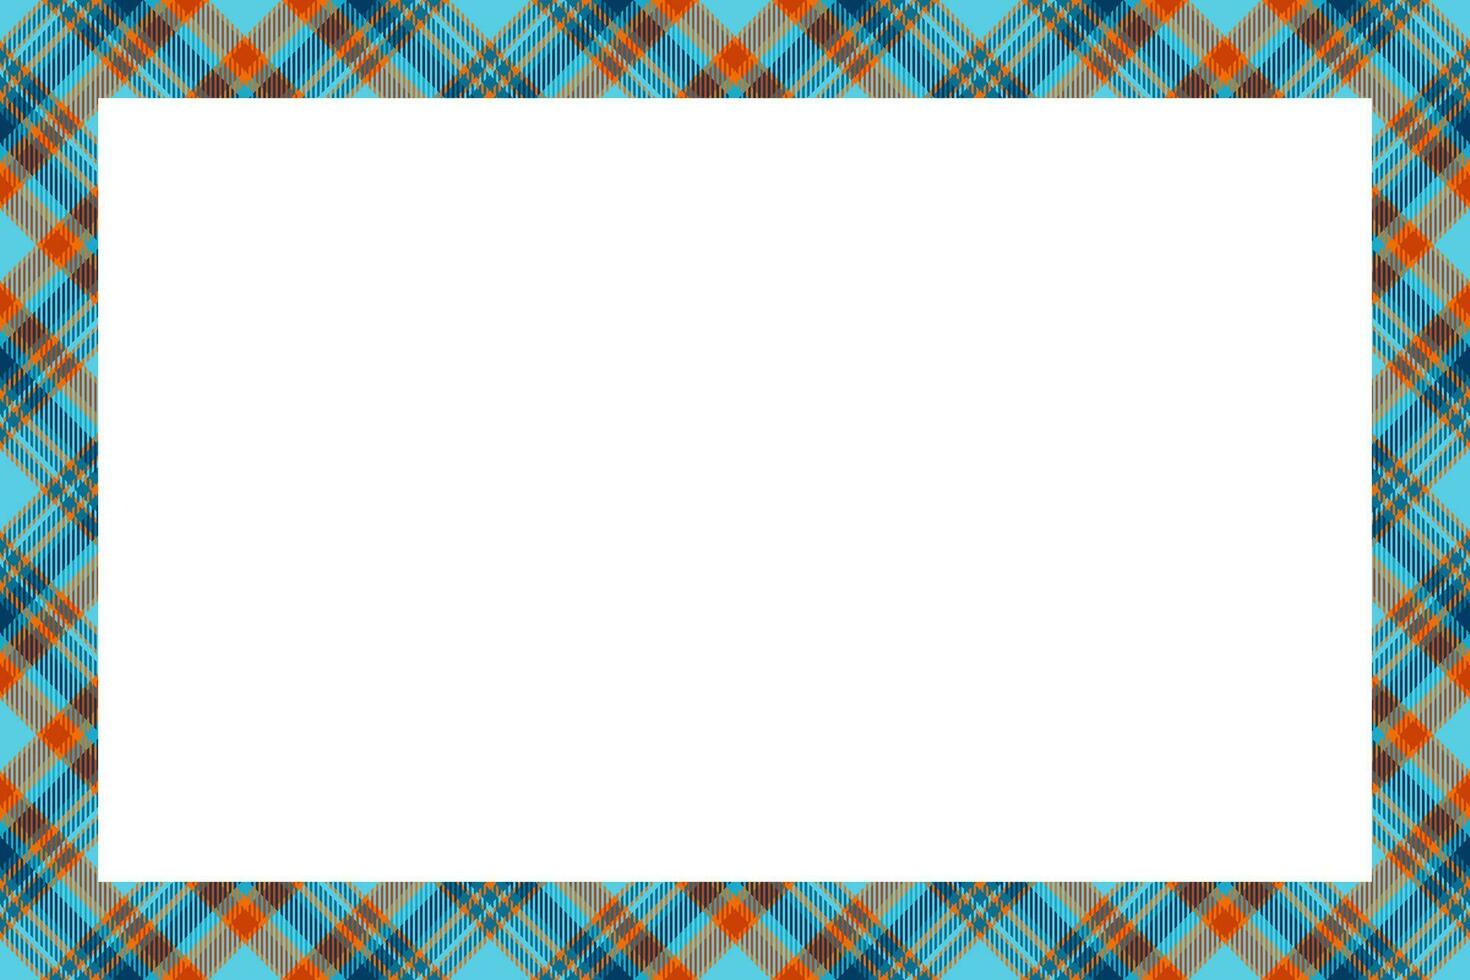 vector de marco antiguo. patrón de borde escocés estilo retro. adorno de tela escocesa de tartán.